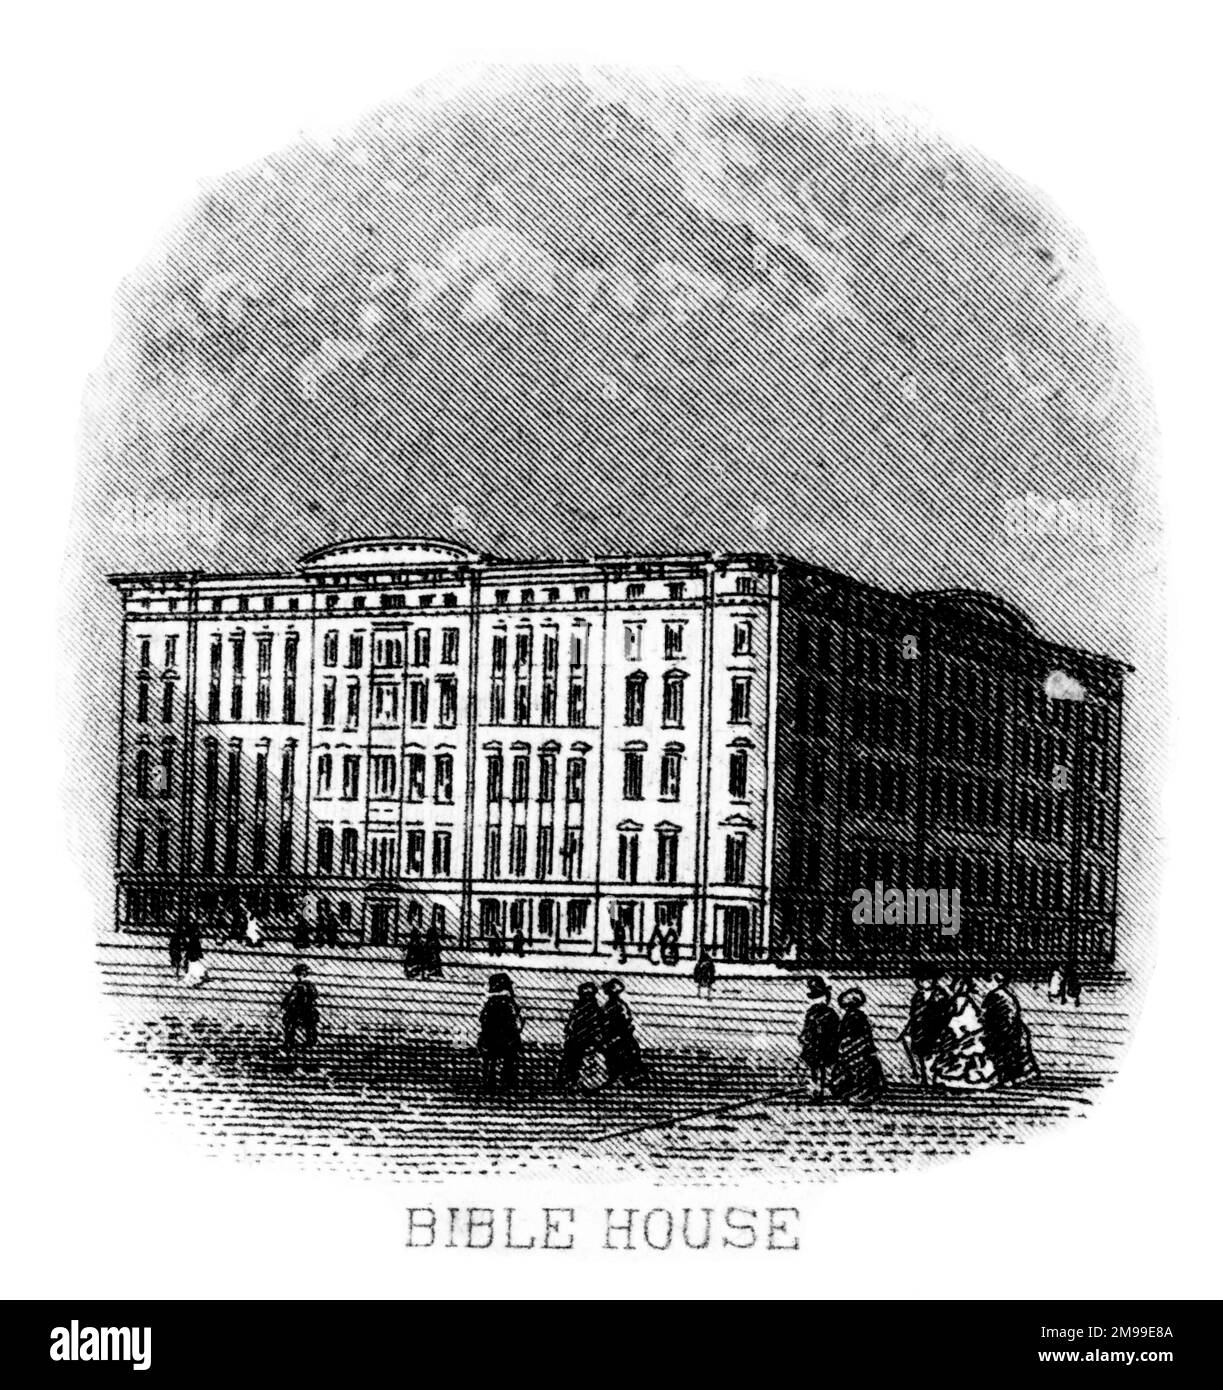 Bible House, New York City, USA. Stock Photo